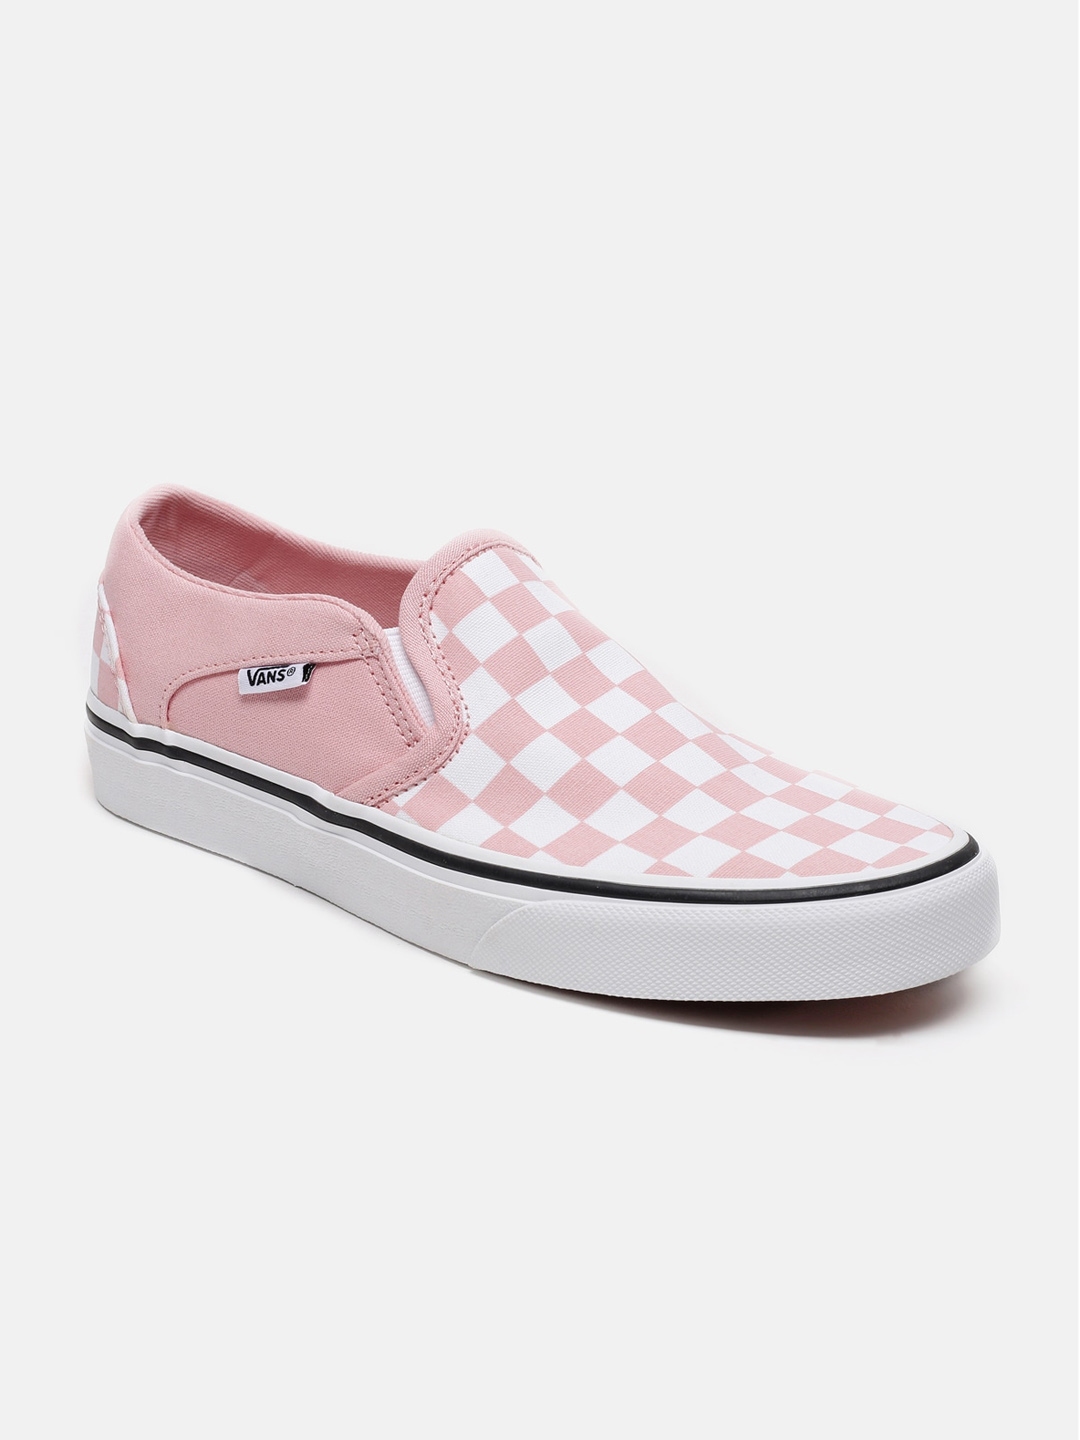 Buy Vans Women Pink Printed Slip On Sneakers Casual Shoes For Women 18462694 Myntra